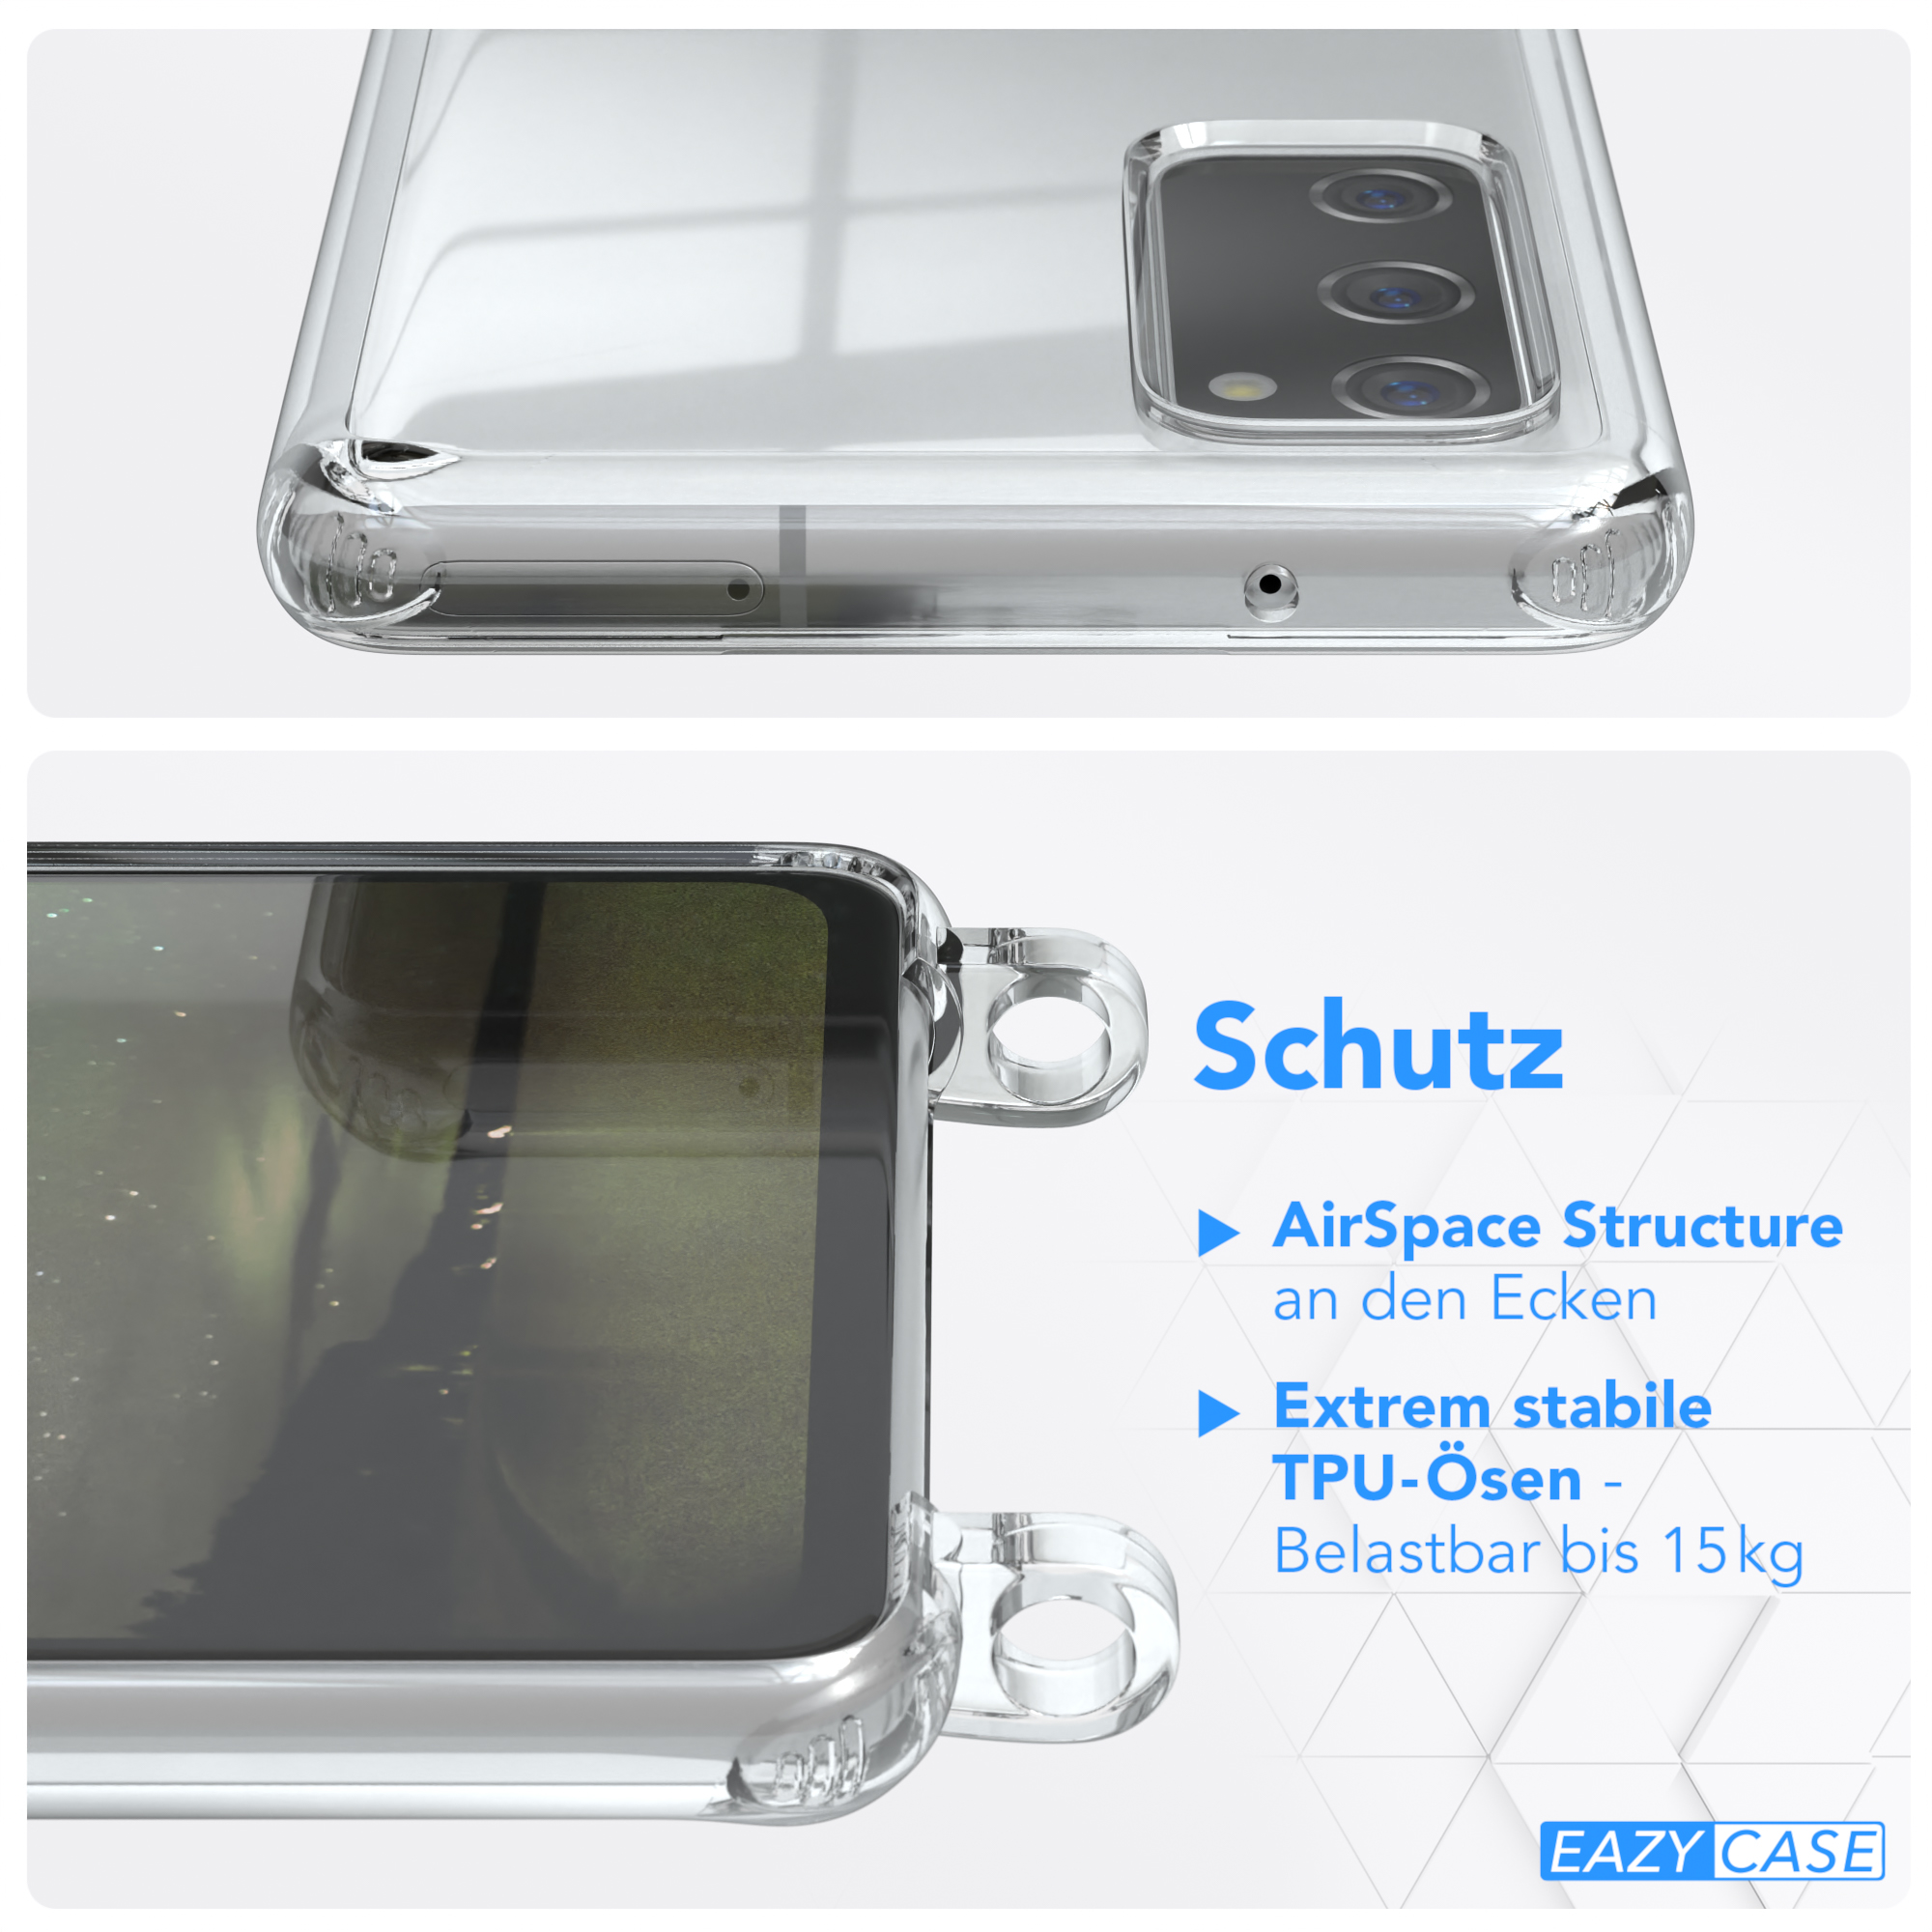 FE / Olive mit Samsung, 5G, Galaxy EAZY Umhängeband, S20 Clear Umhängetasche, Grün FE Cover CASE S20